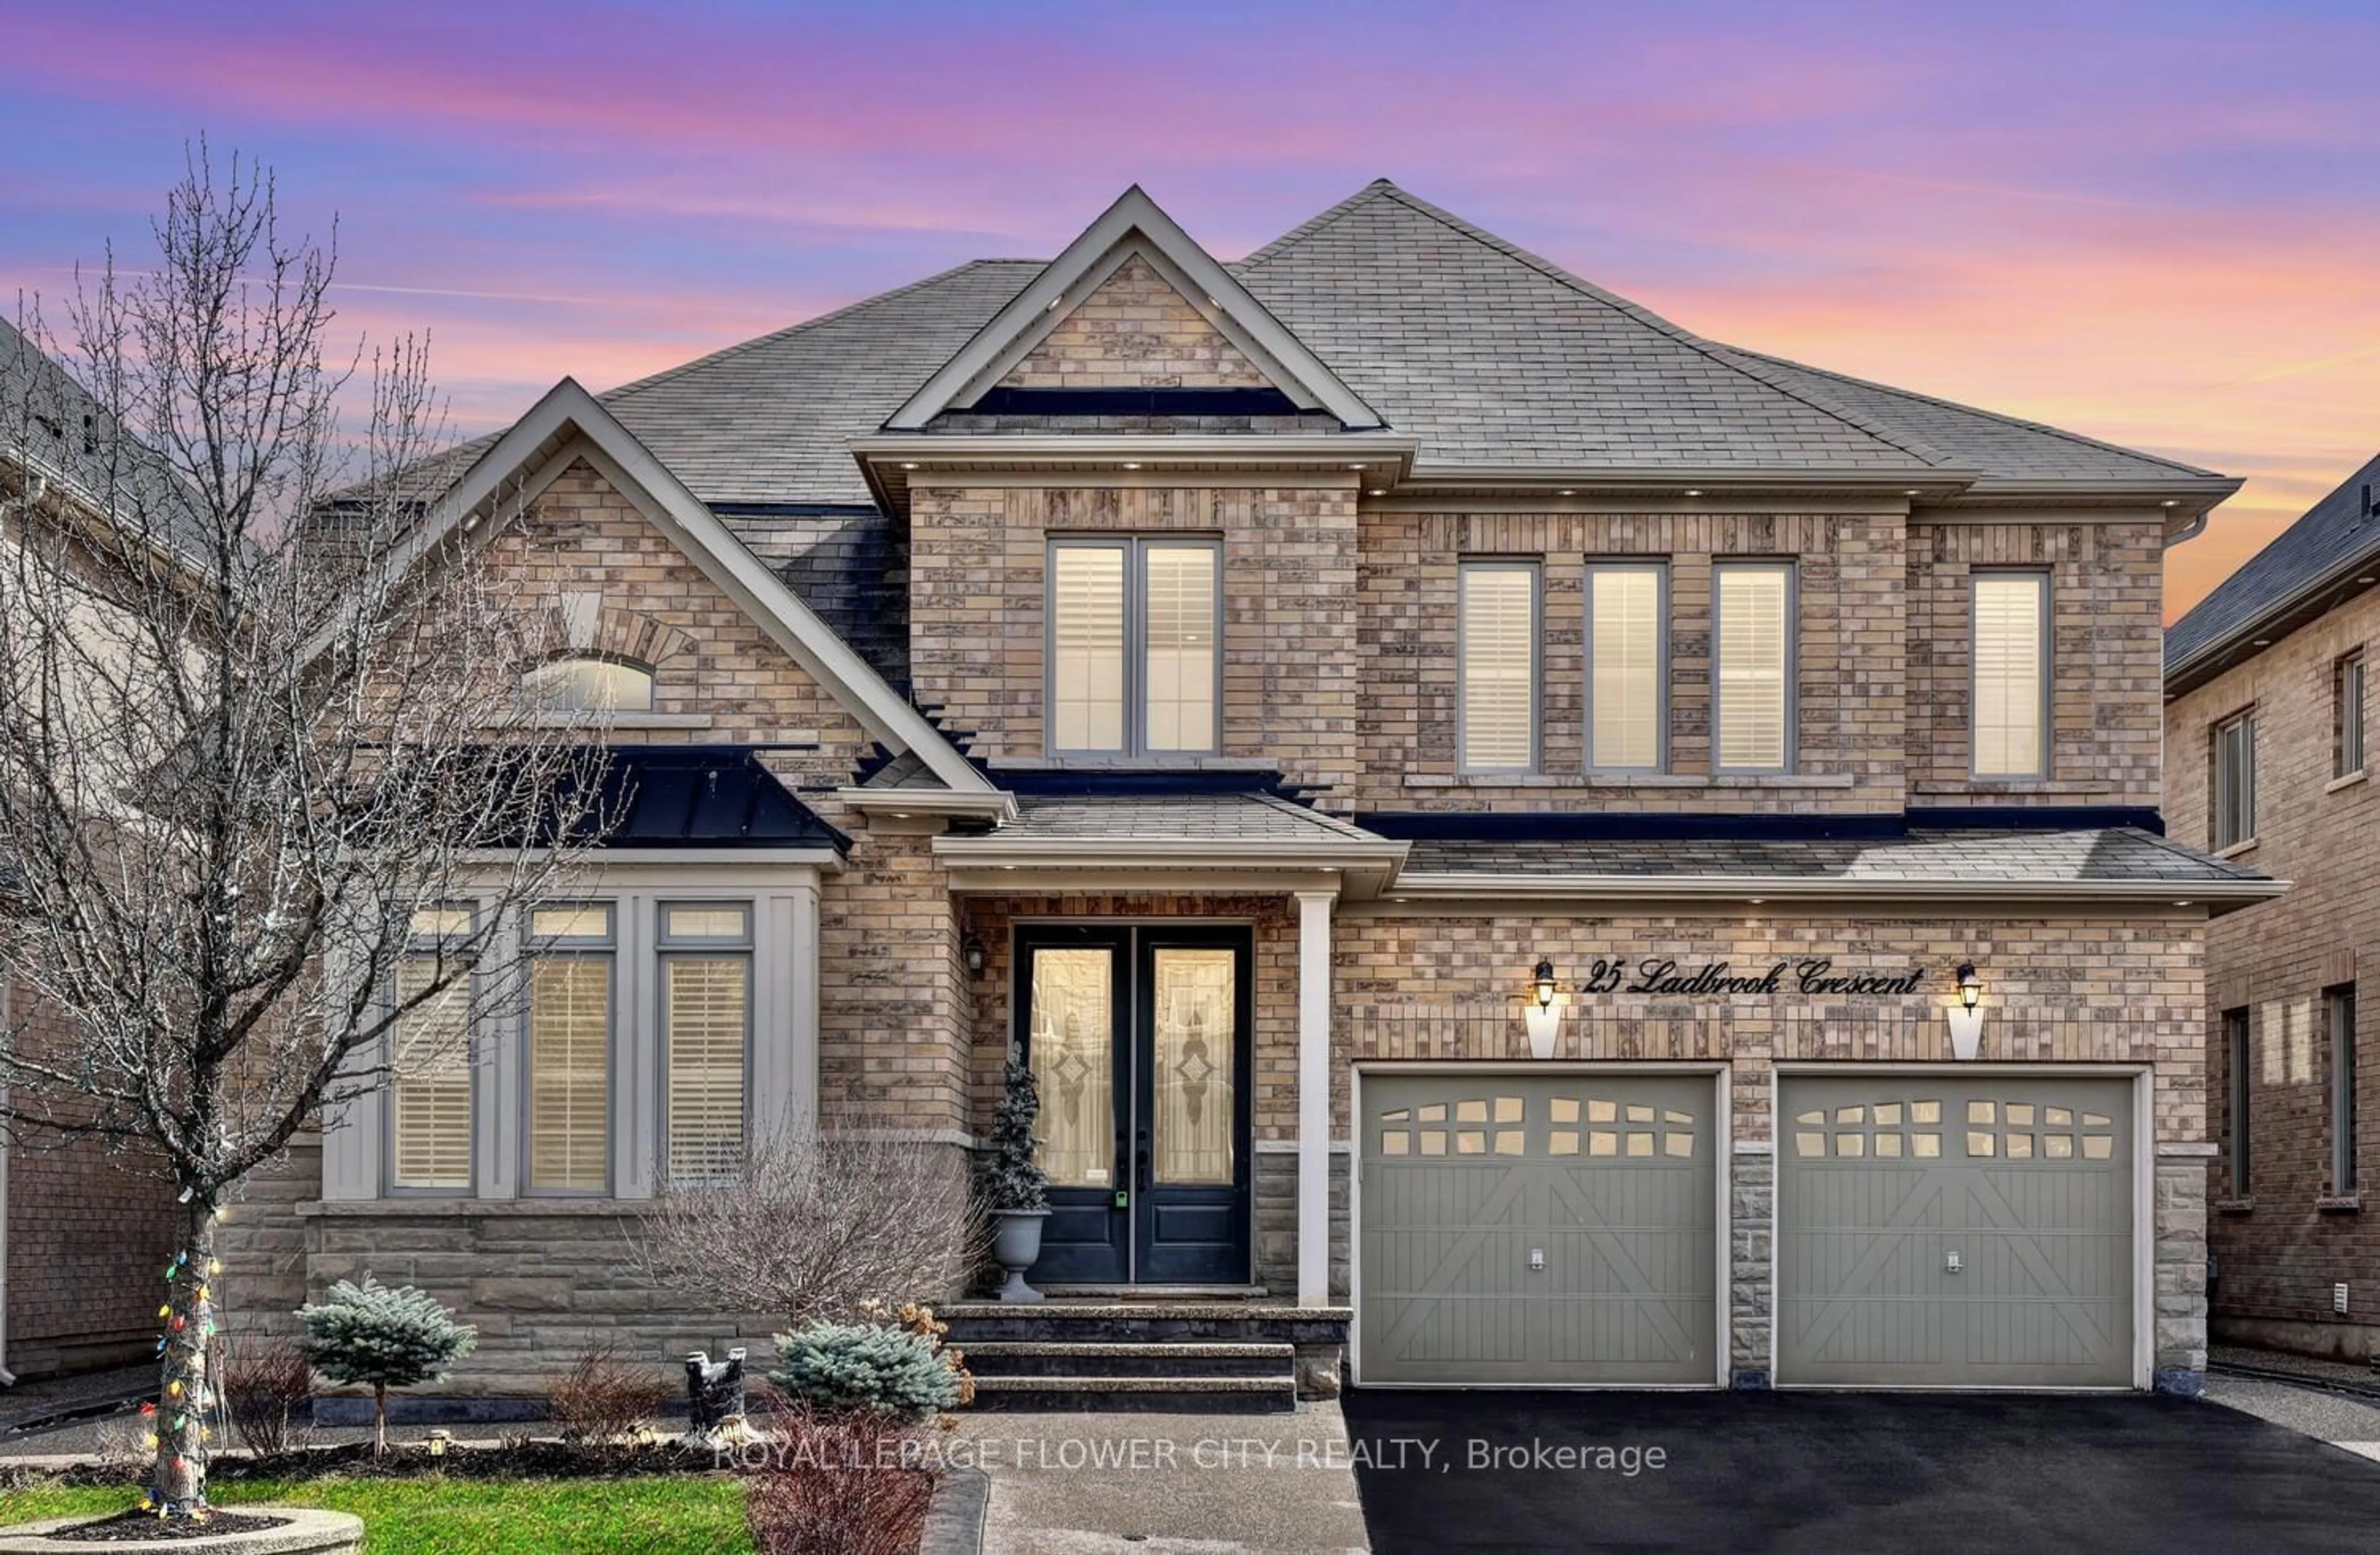 Home with brick exterior material for 25 Ladbrook Cres, Brampton Ontario L6X 5H7